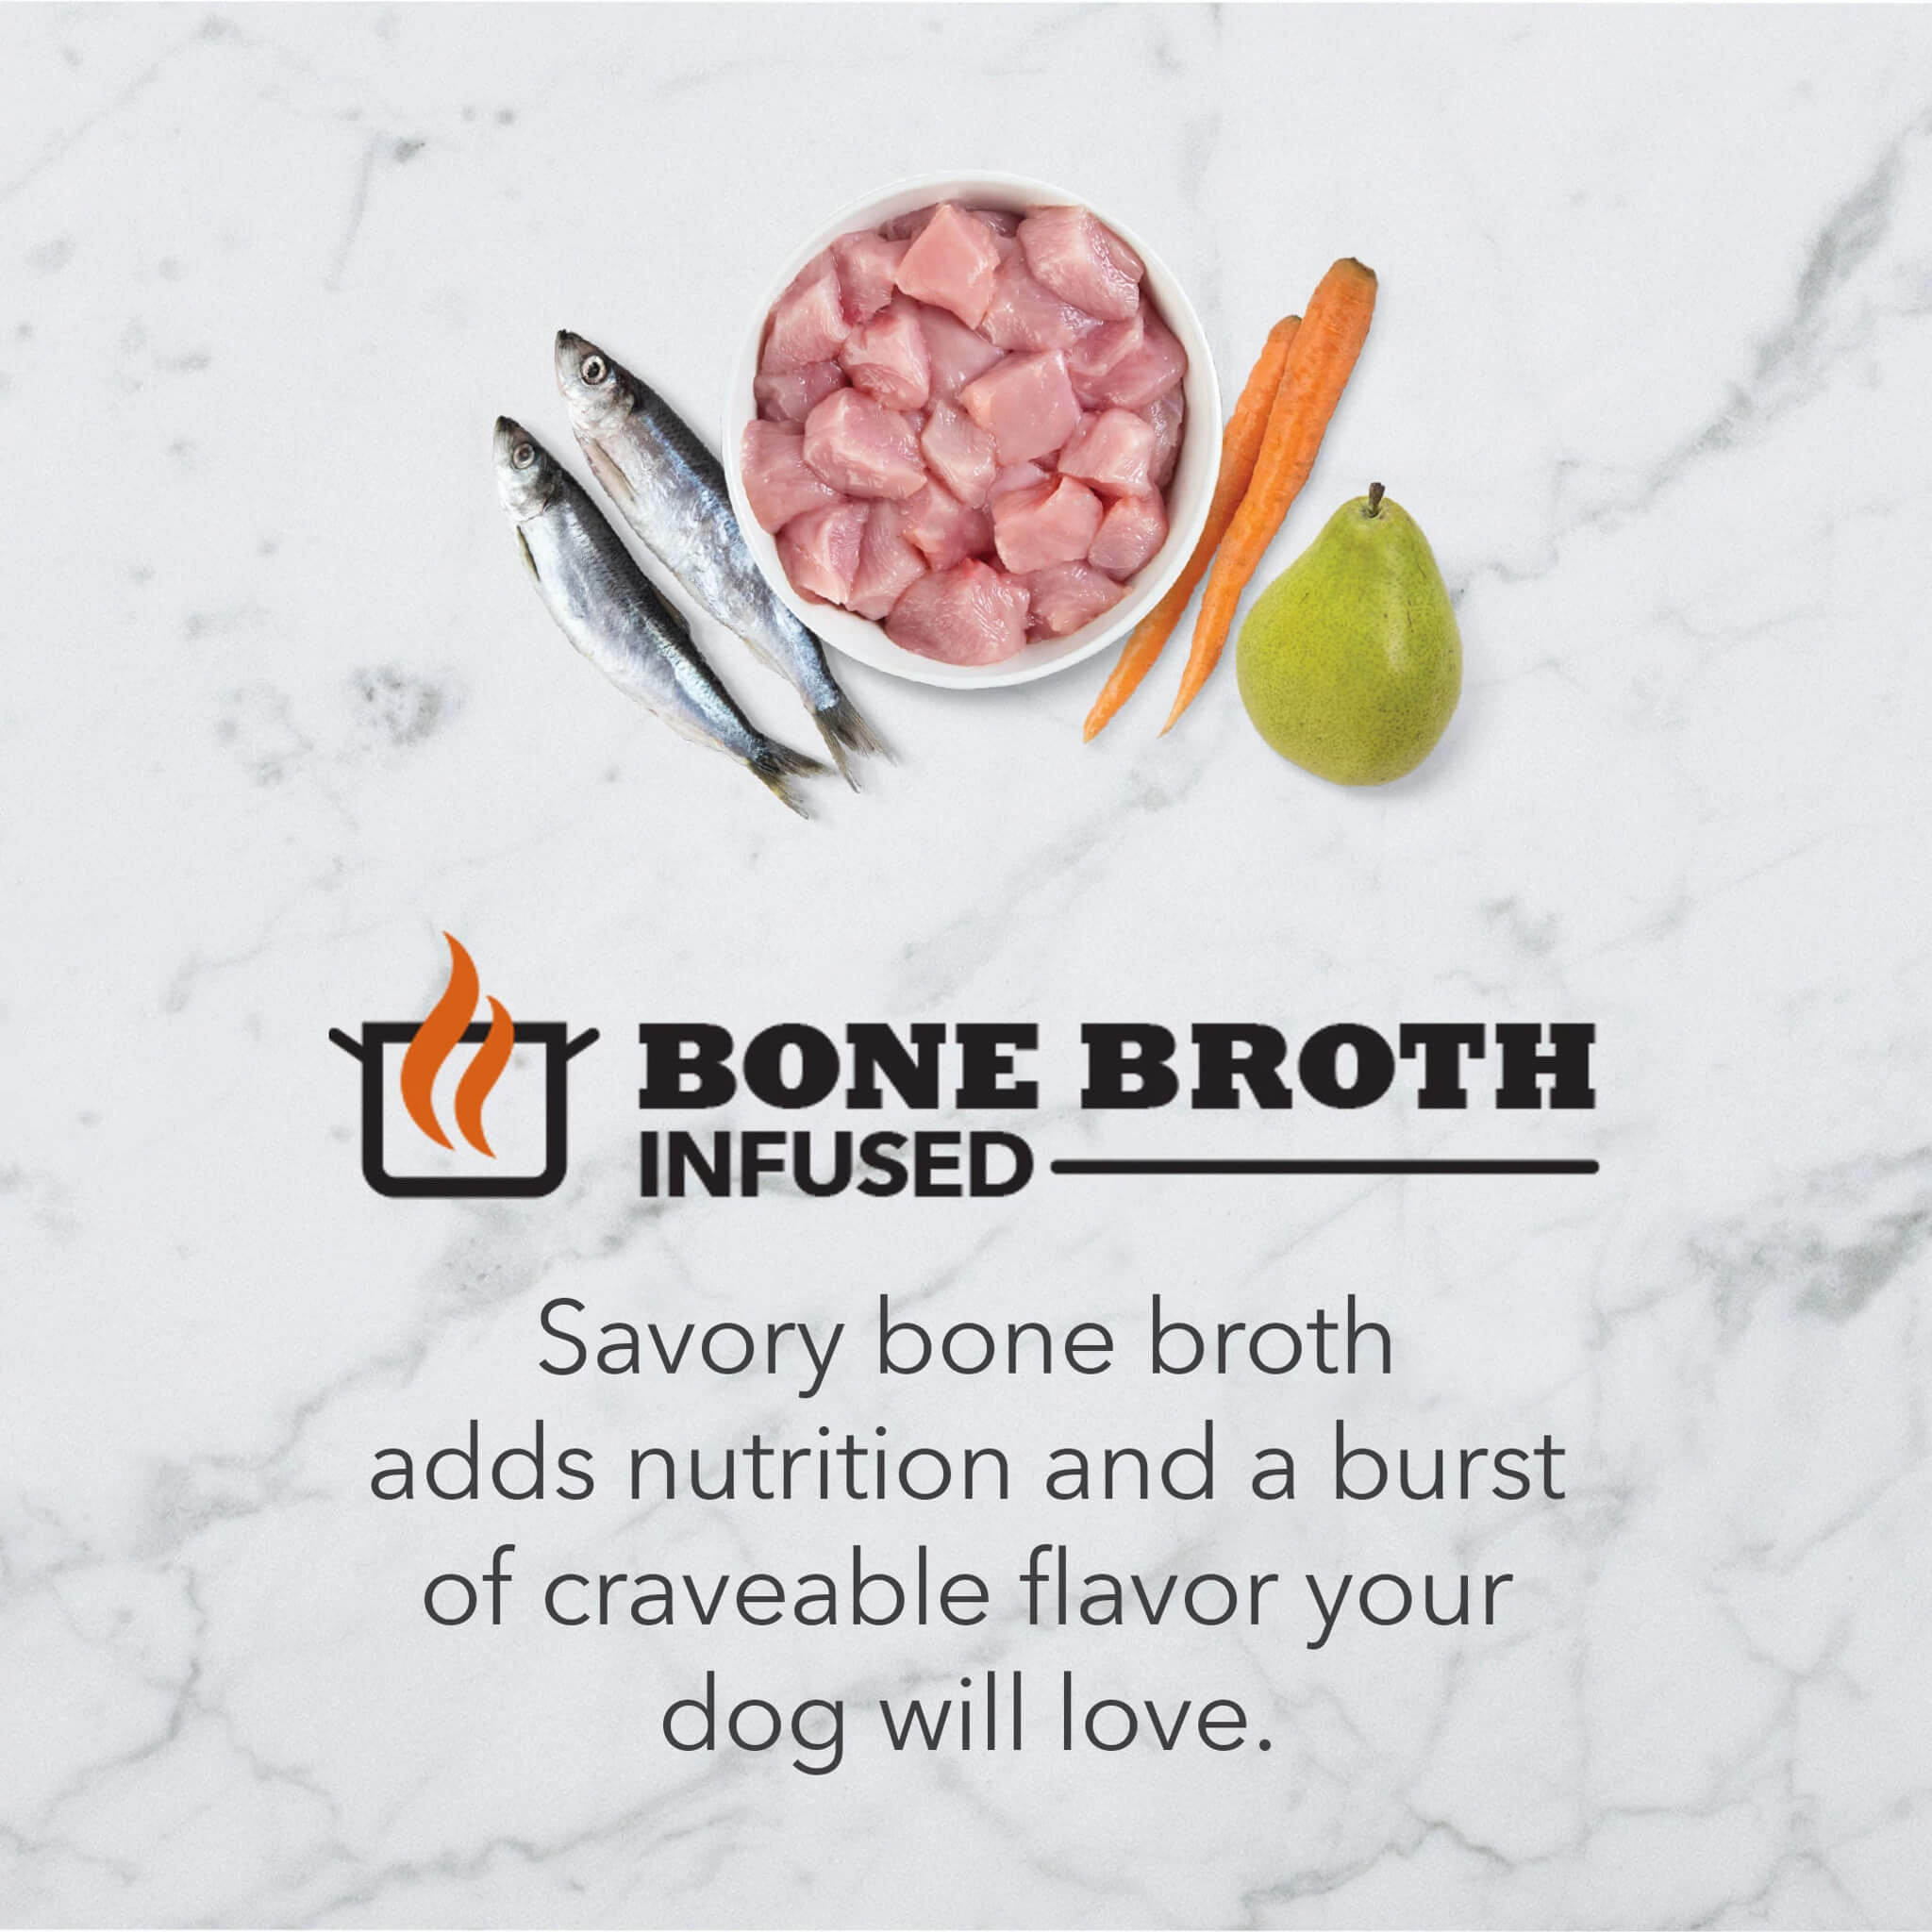 Bone broth infused